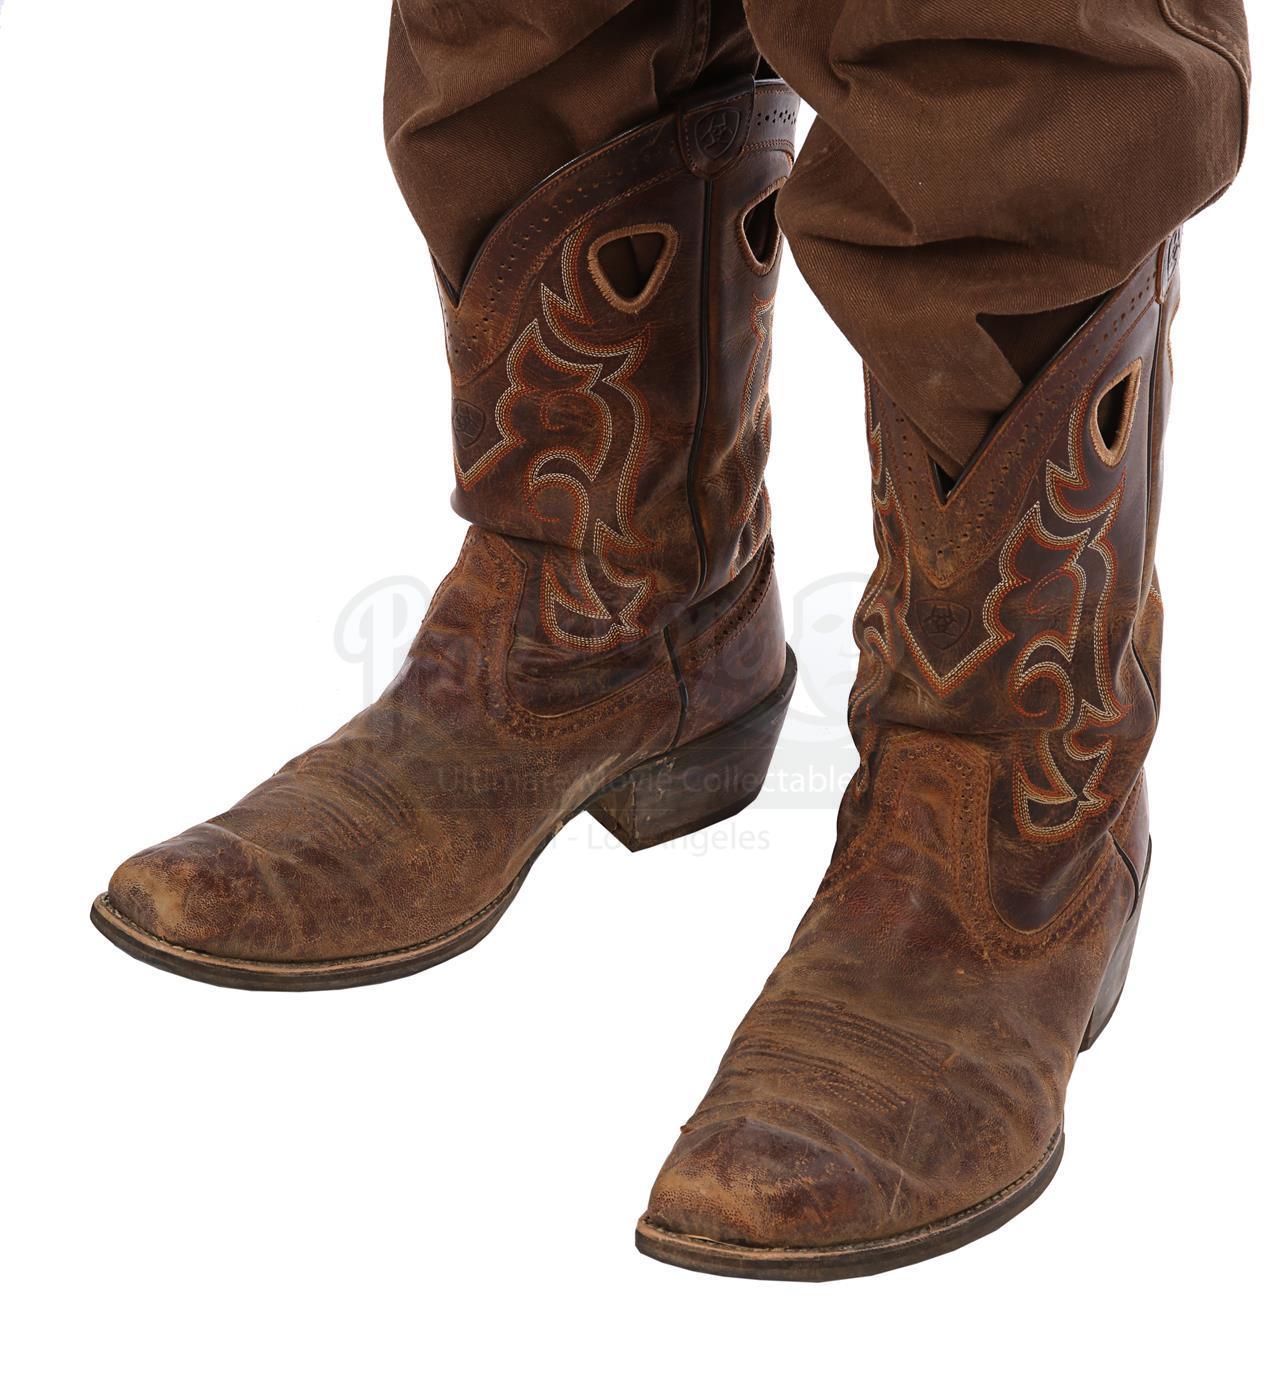 chris pratt cowboy boots